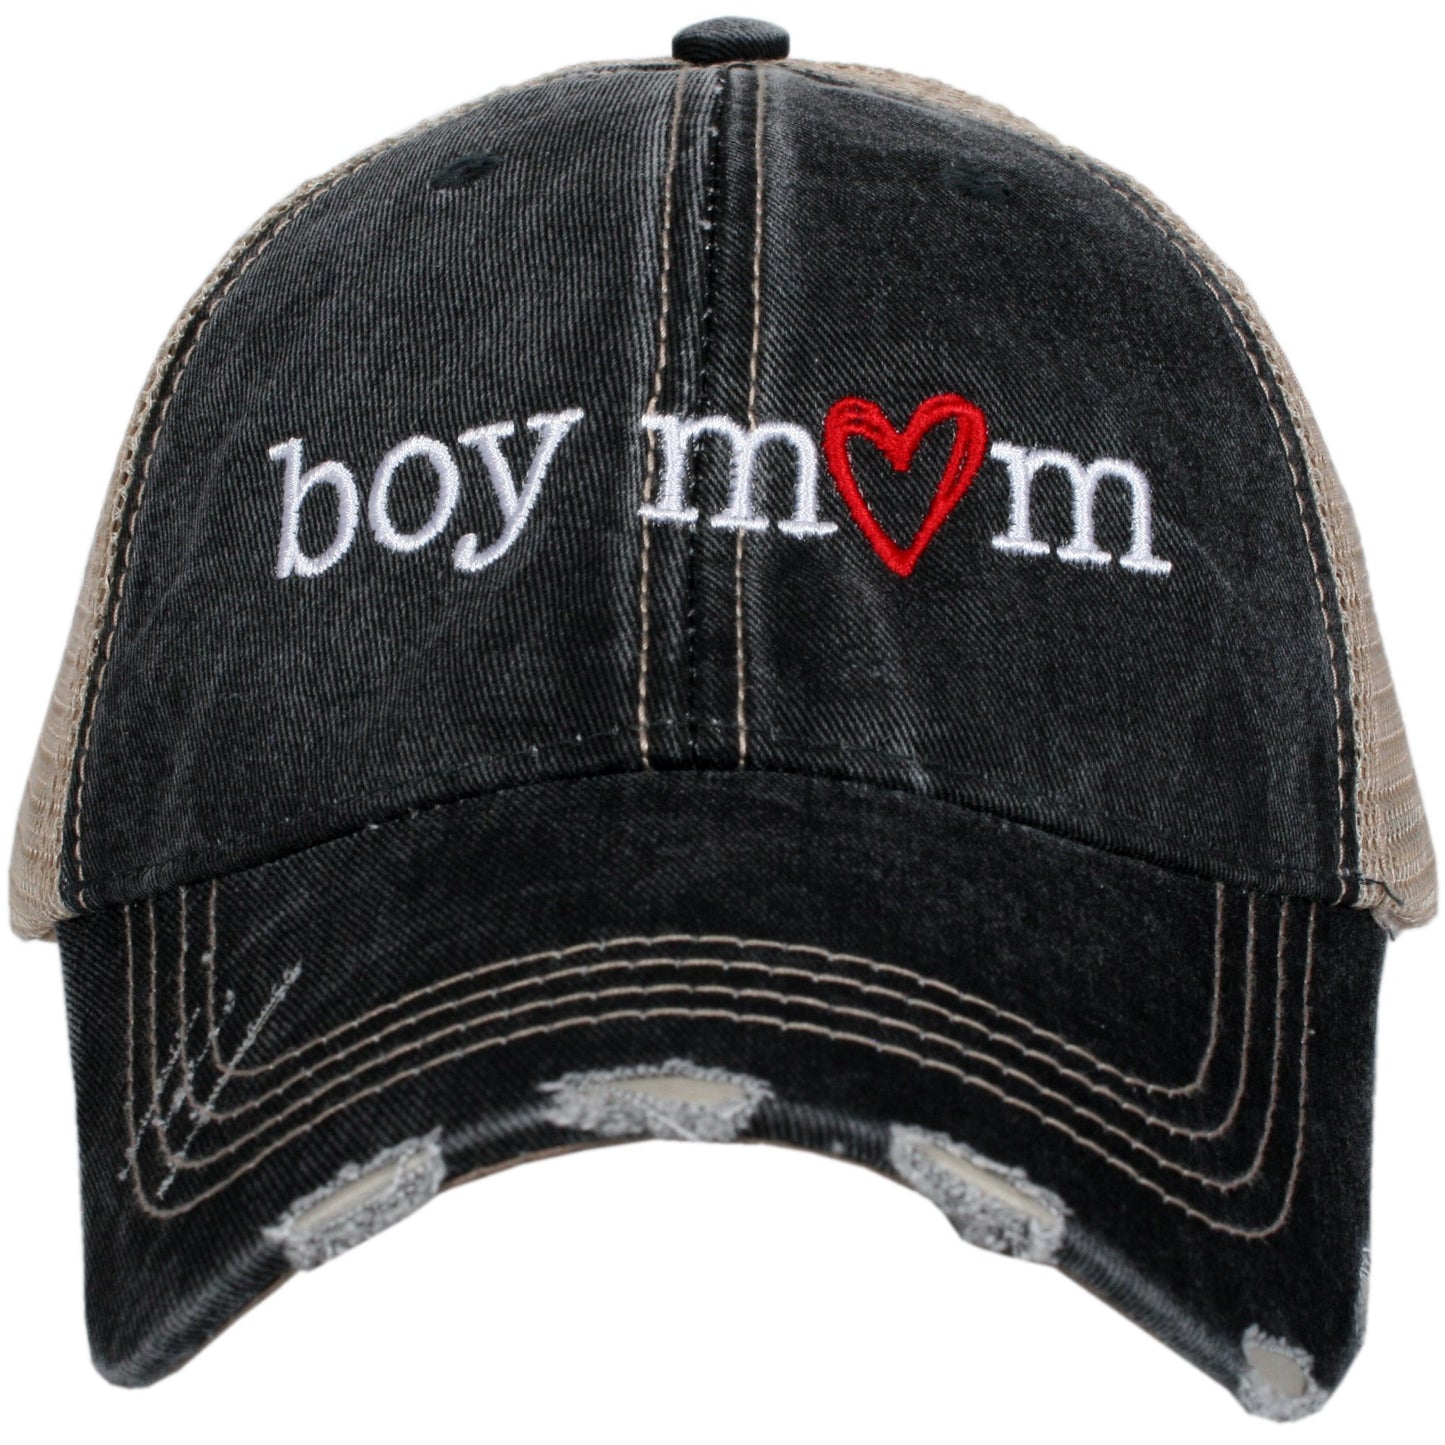 Mom Hat by Katydid